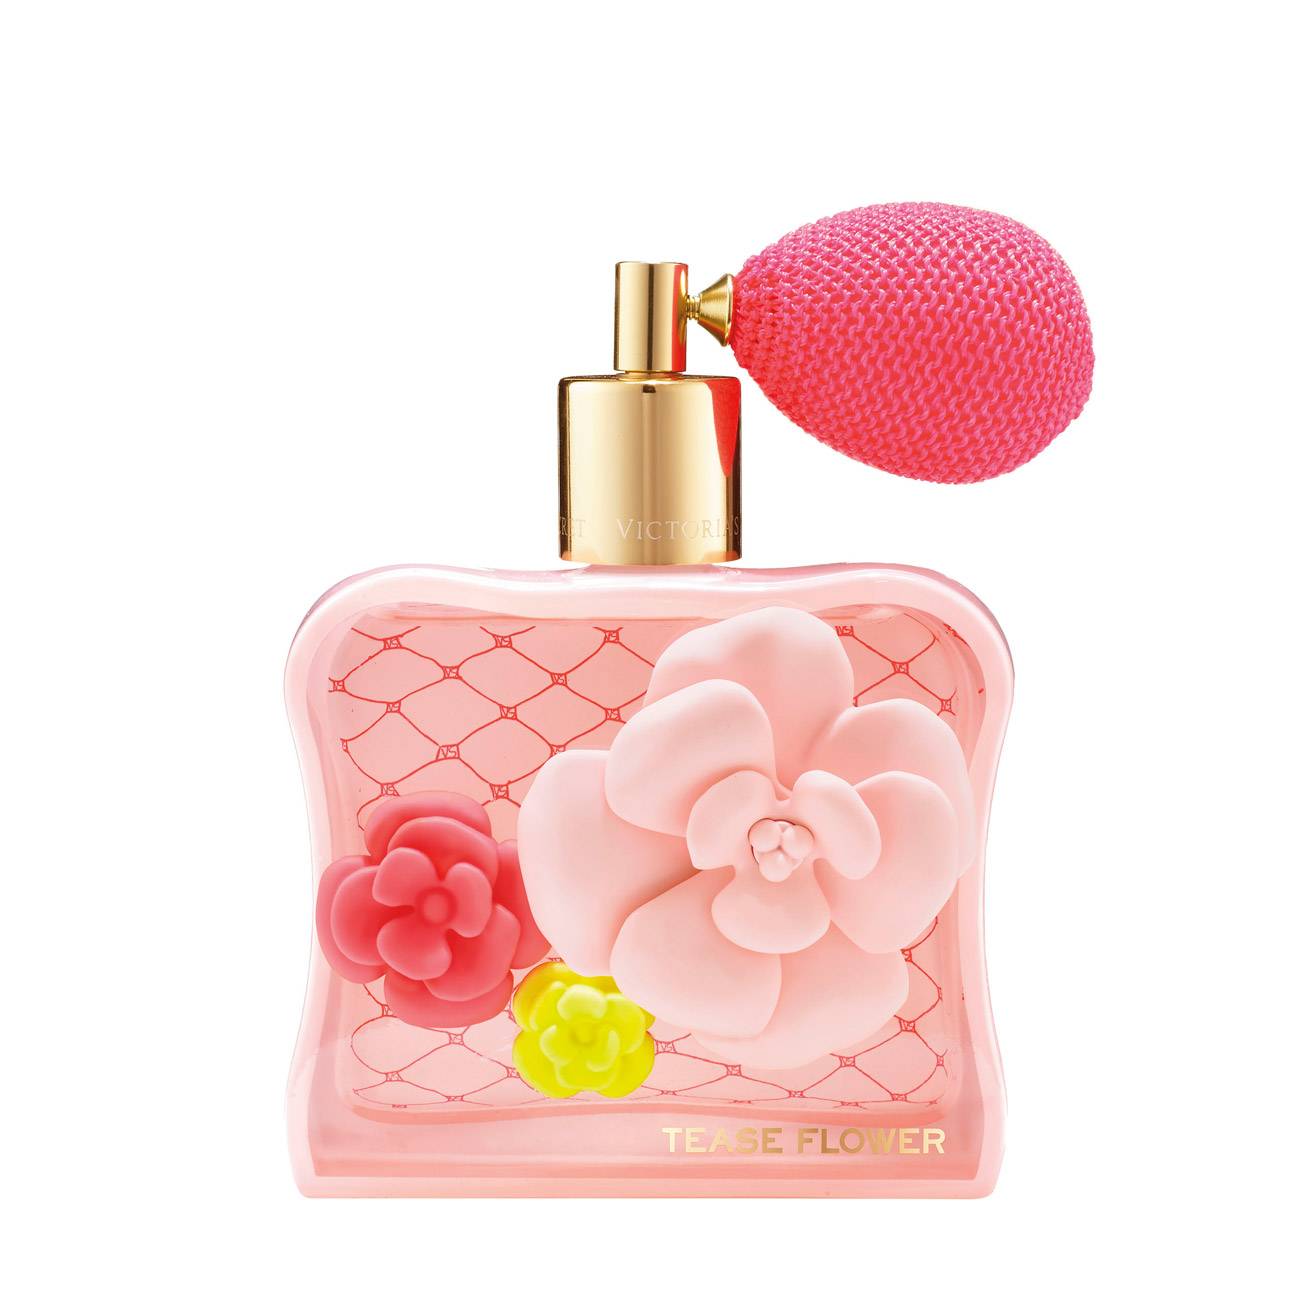 Apa de Parfum Victoria's Secret TEASE FLOWER 100ml cu comanda online